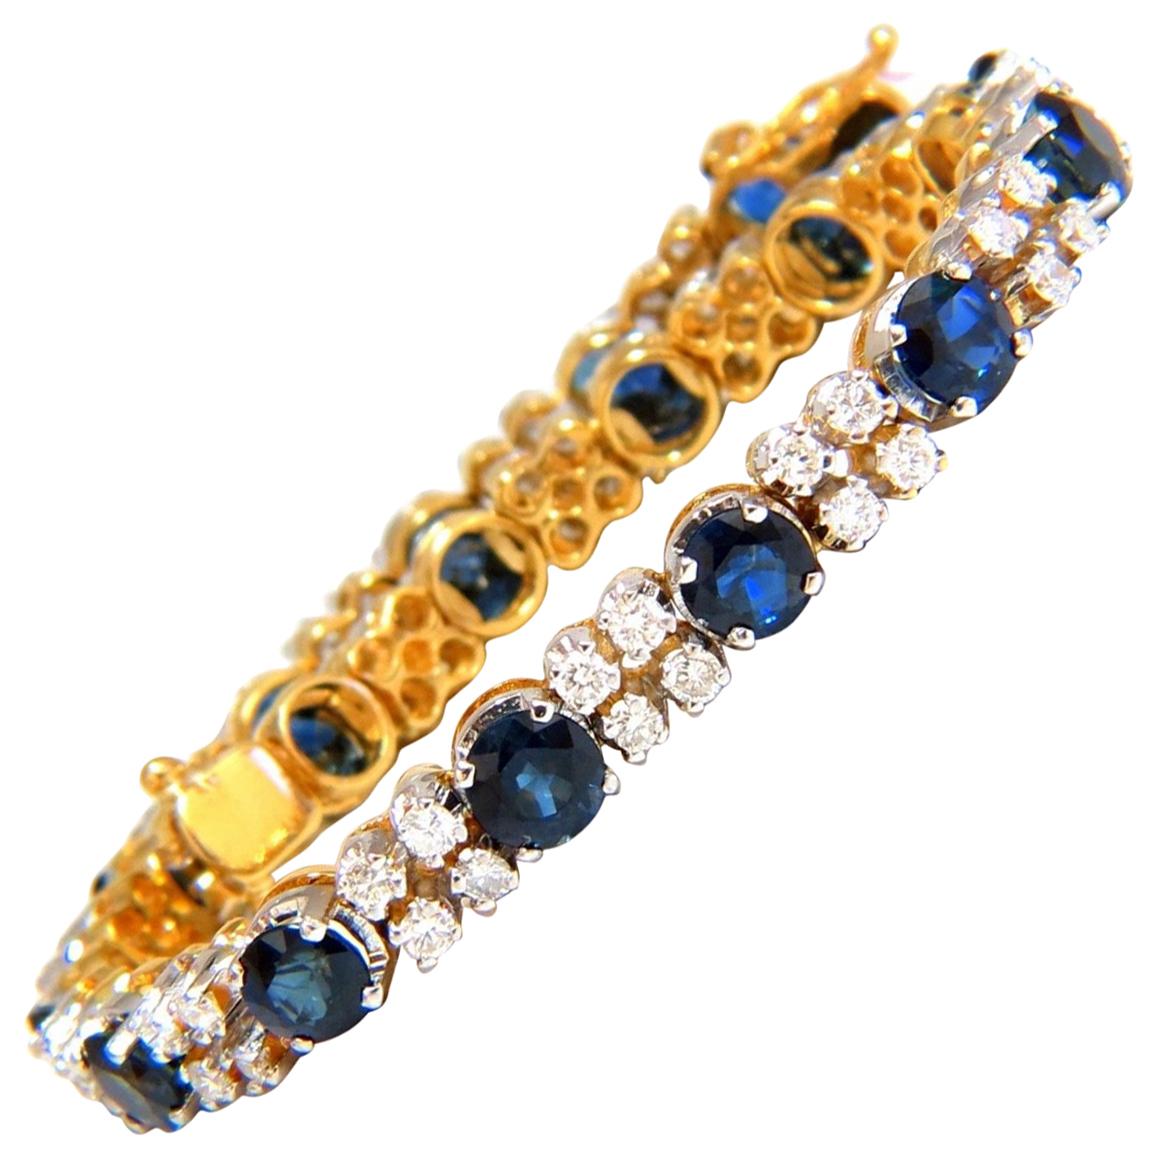 10 Carat Natural Blue Sapphire 2.50 Carat Diamonds Bracelet 14 Karat